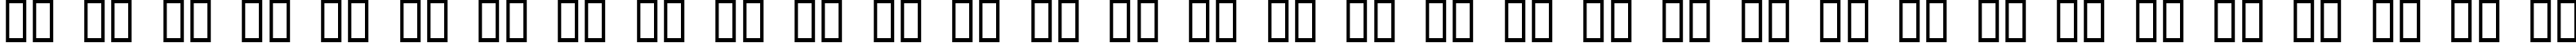 Пример написания русского алфавита шрифтом Klondike